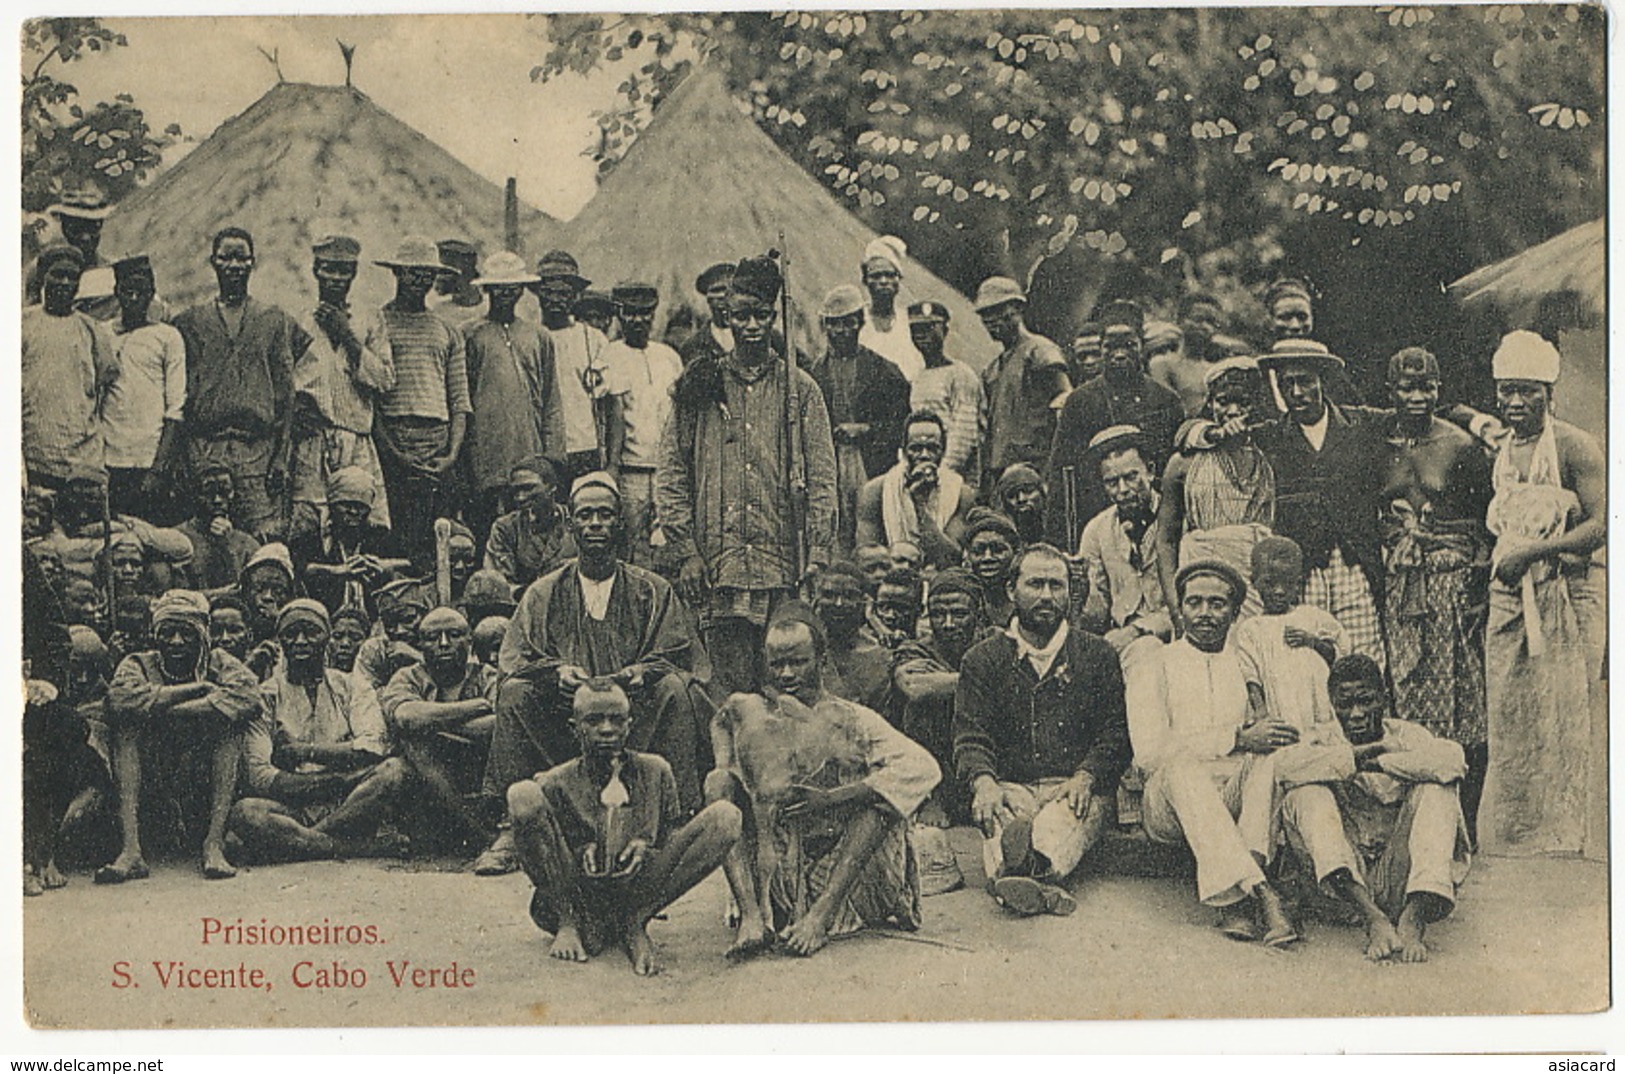 S. Vicente Cabo Verde Prisioneiros  Prisoners - Cape Verde